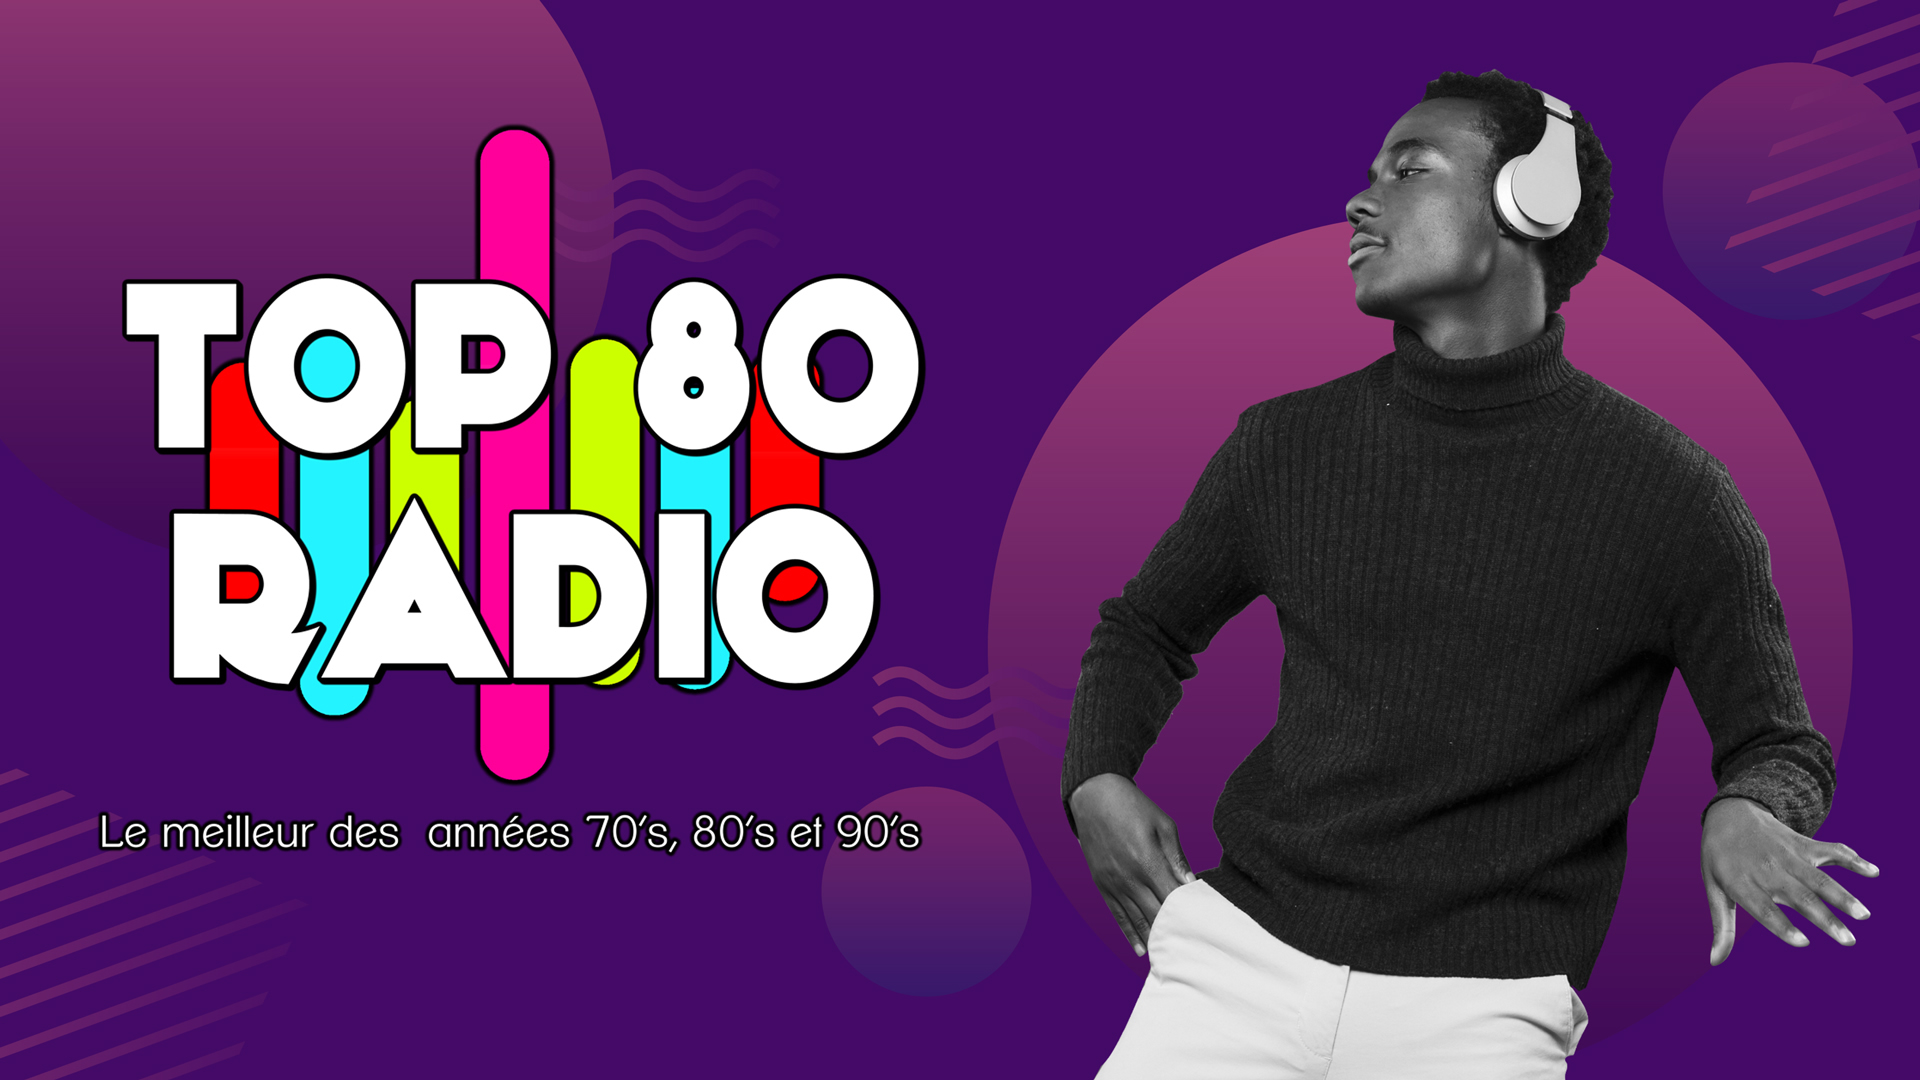 WALLPAPER–TOP-80-RADIO—31